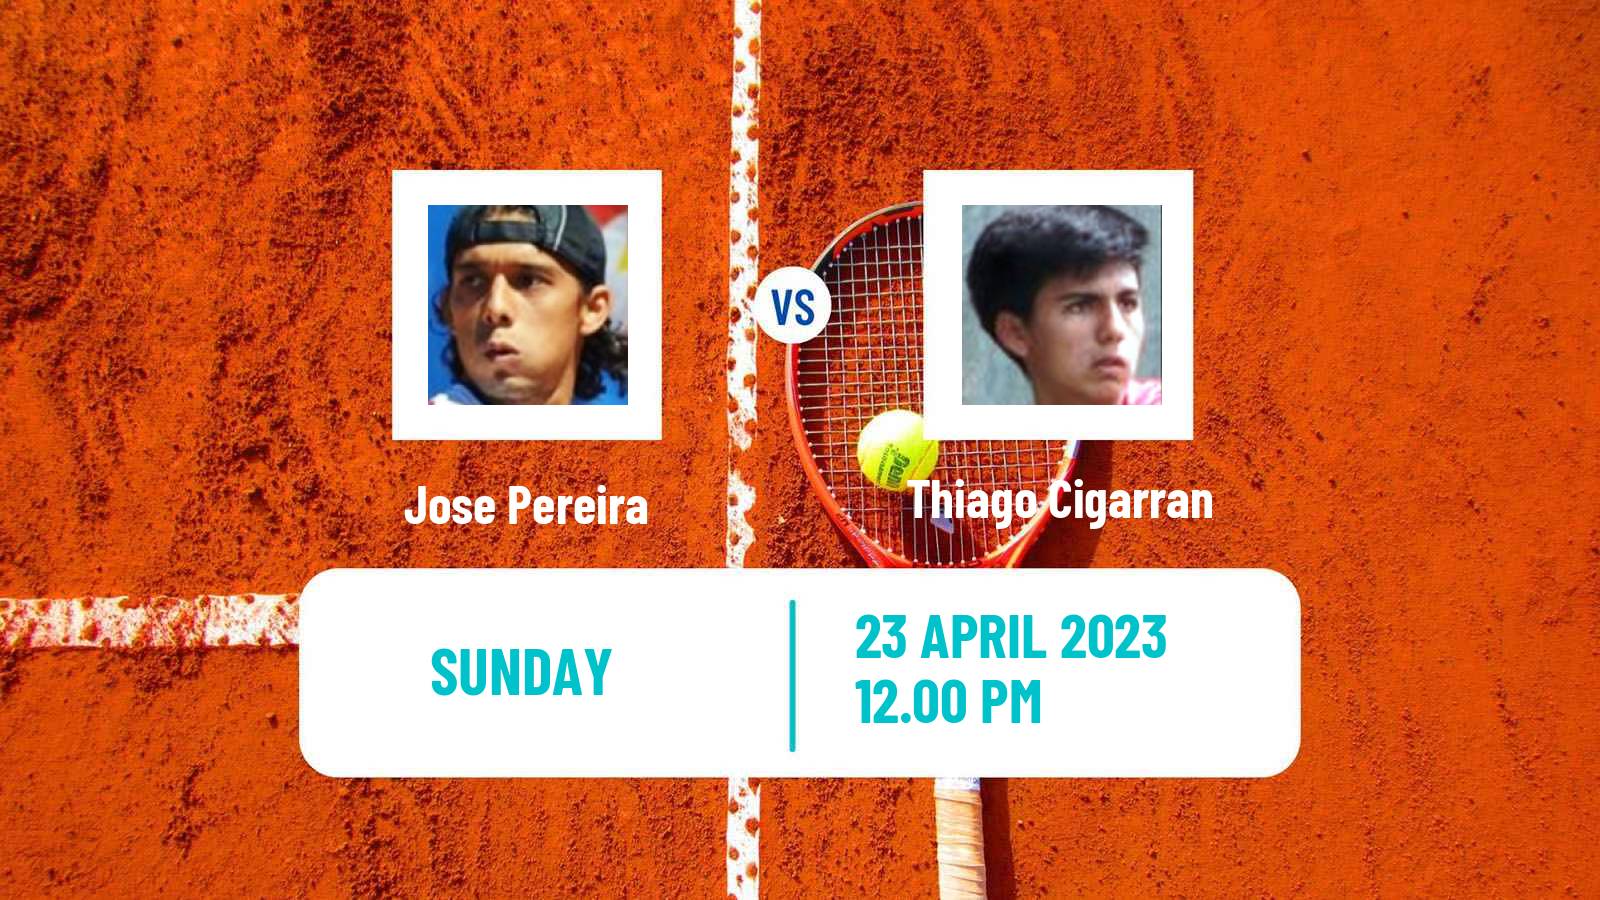 Tennis ATP Challenger Jose Pereira - Thiago Cigarran